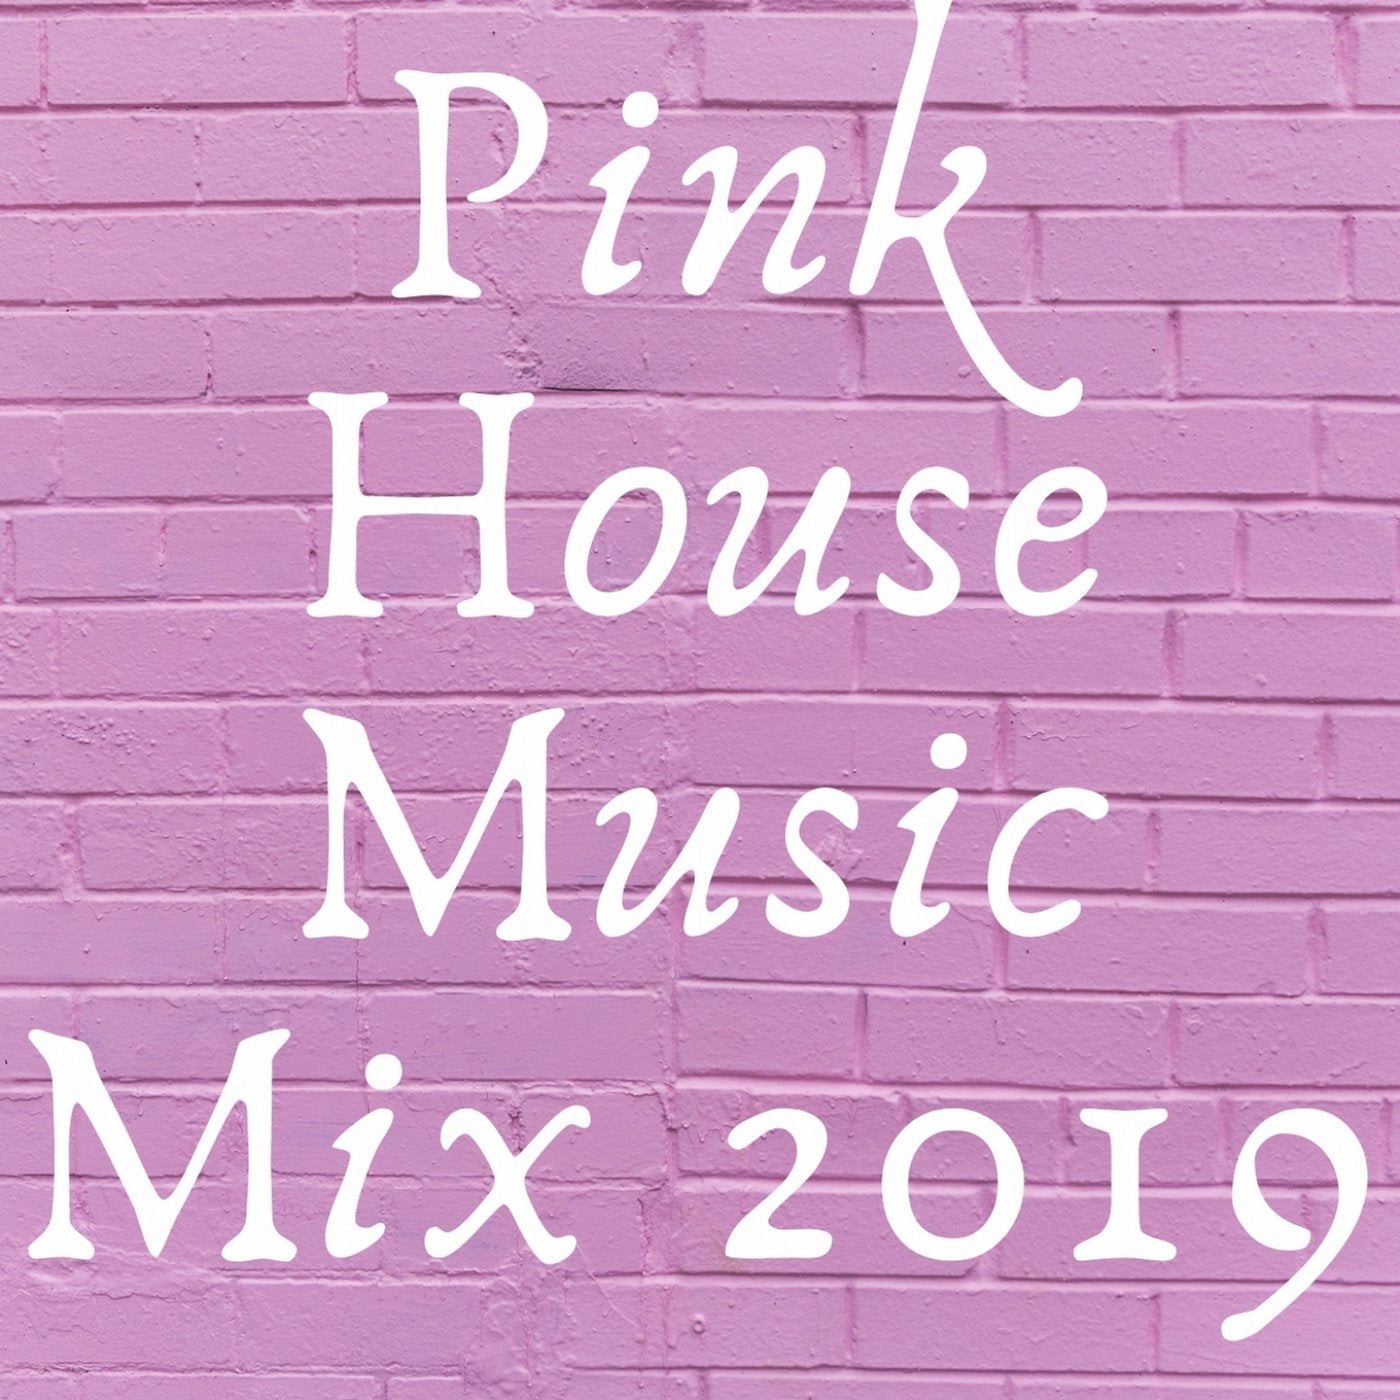 PINK HOUSE MUSIC MIX 2019